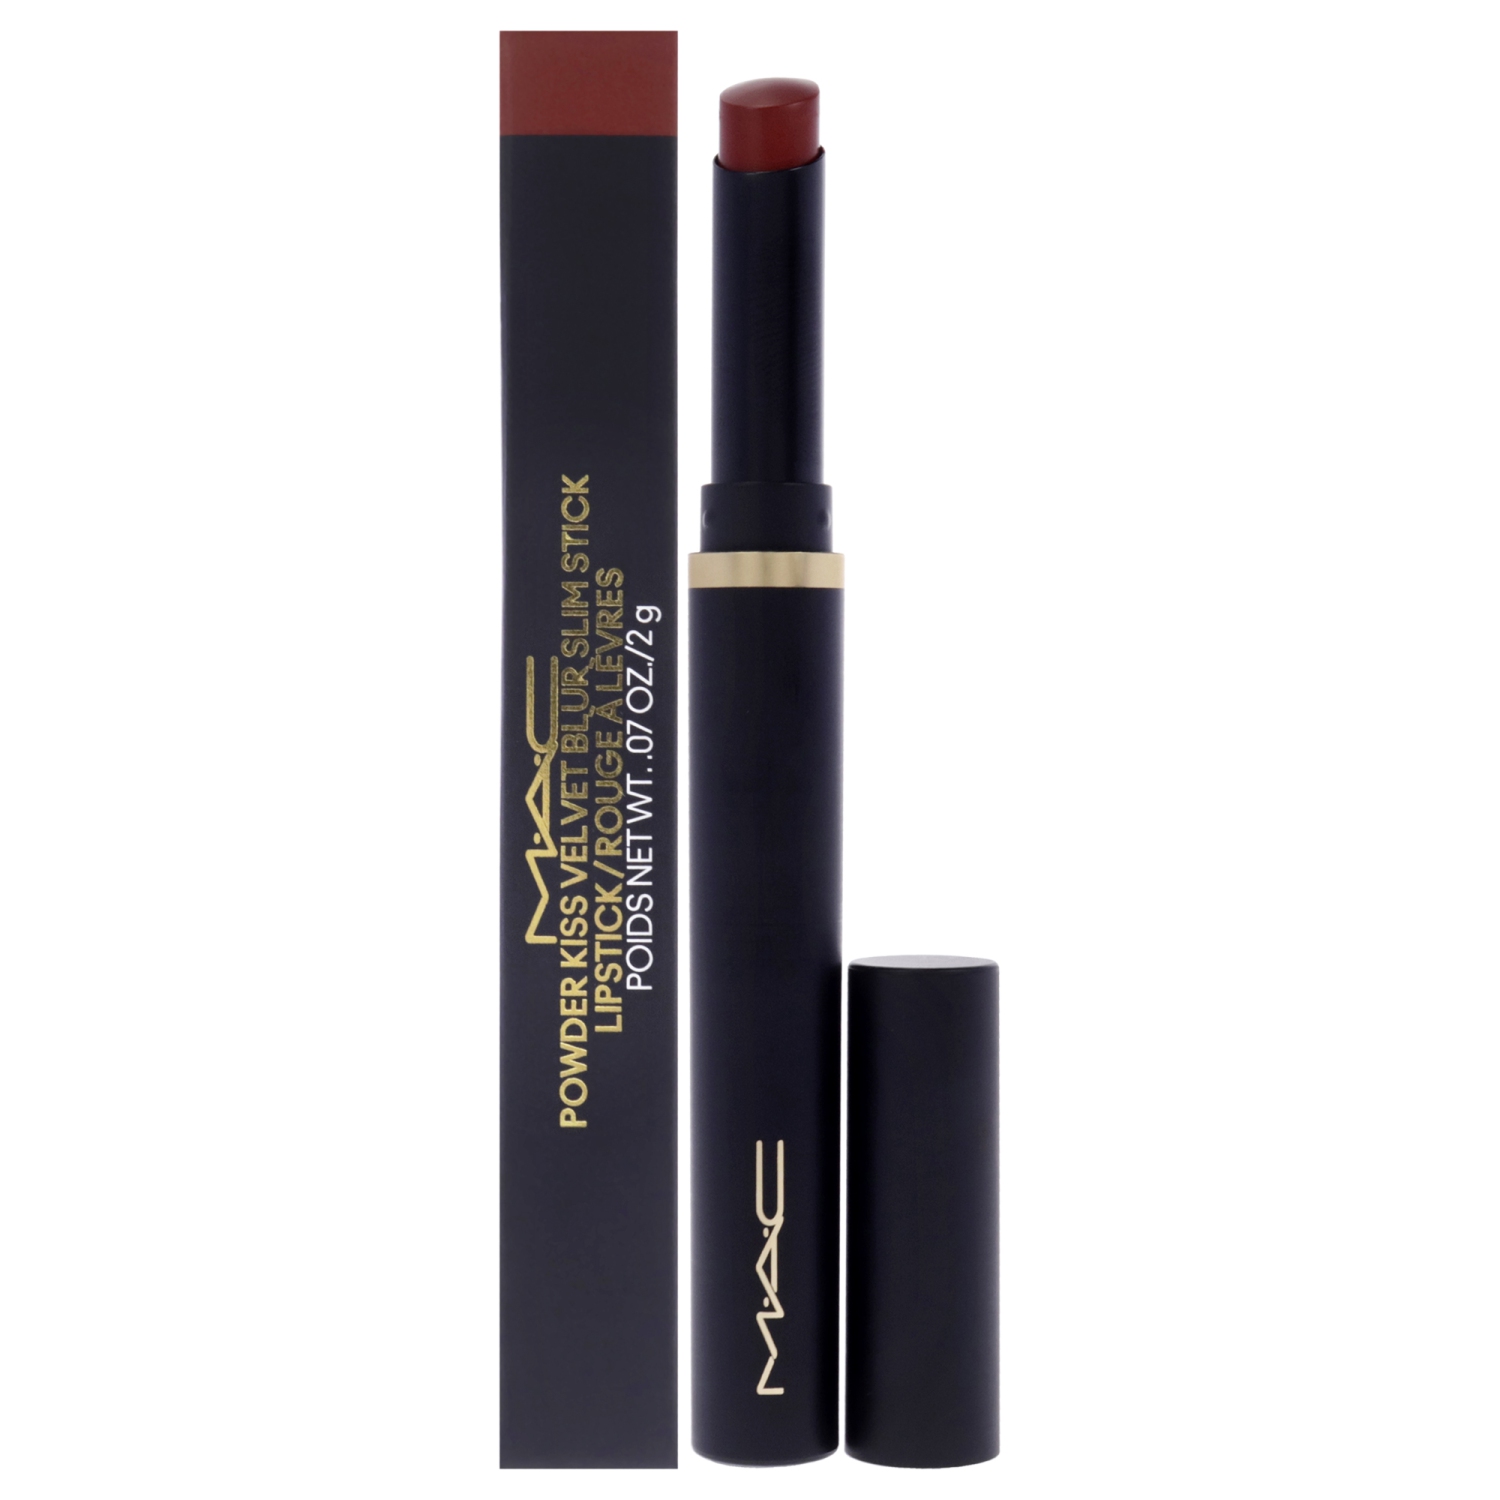 Powder Kiss Velvet Blur Slim Stick - Pumpkin Spiced by MAC for Women - 0.7 oz Lipstick